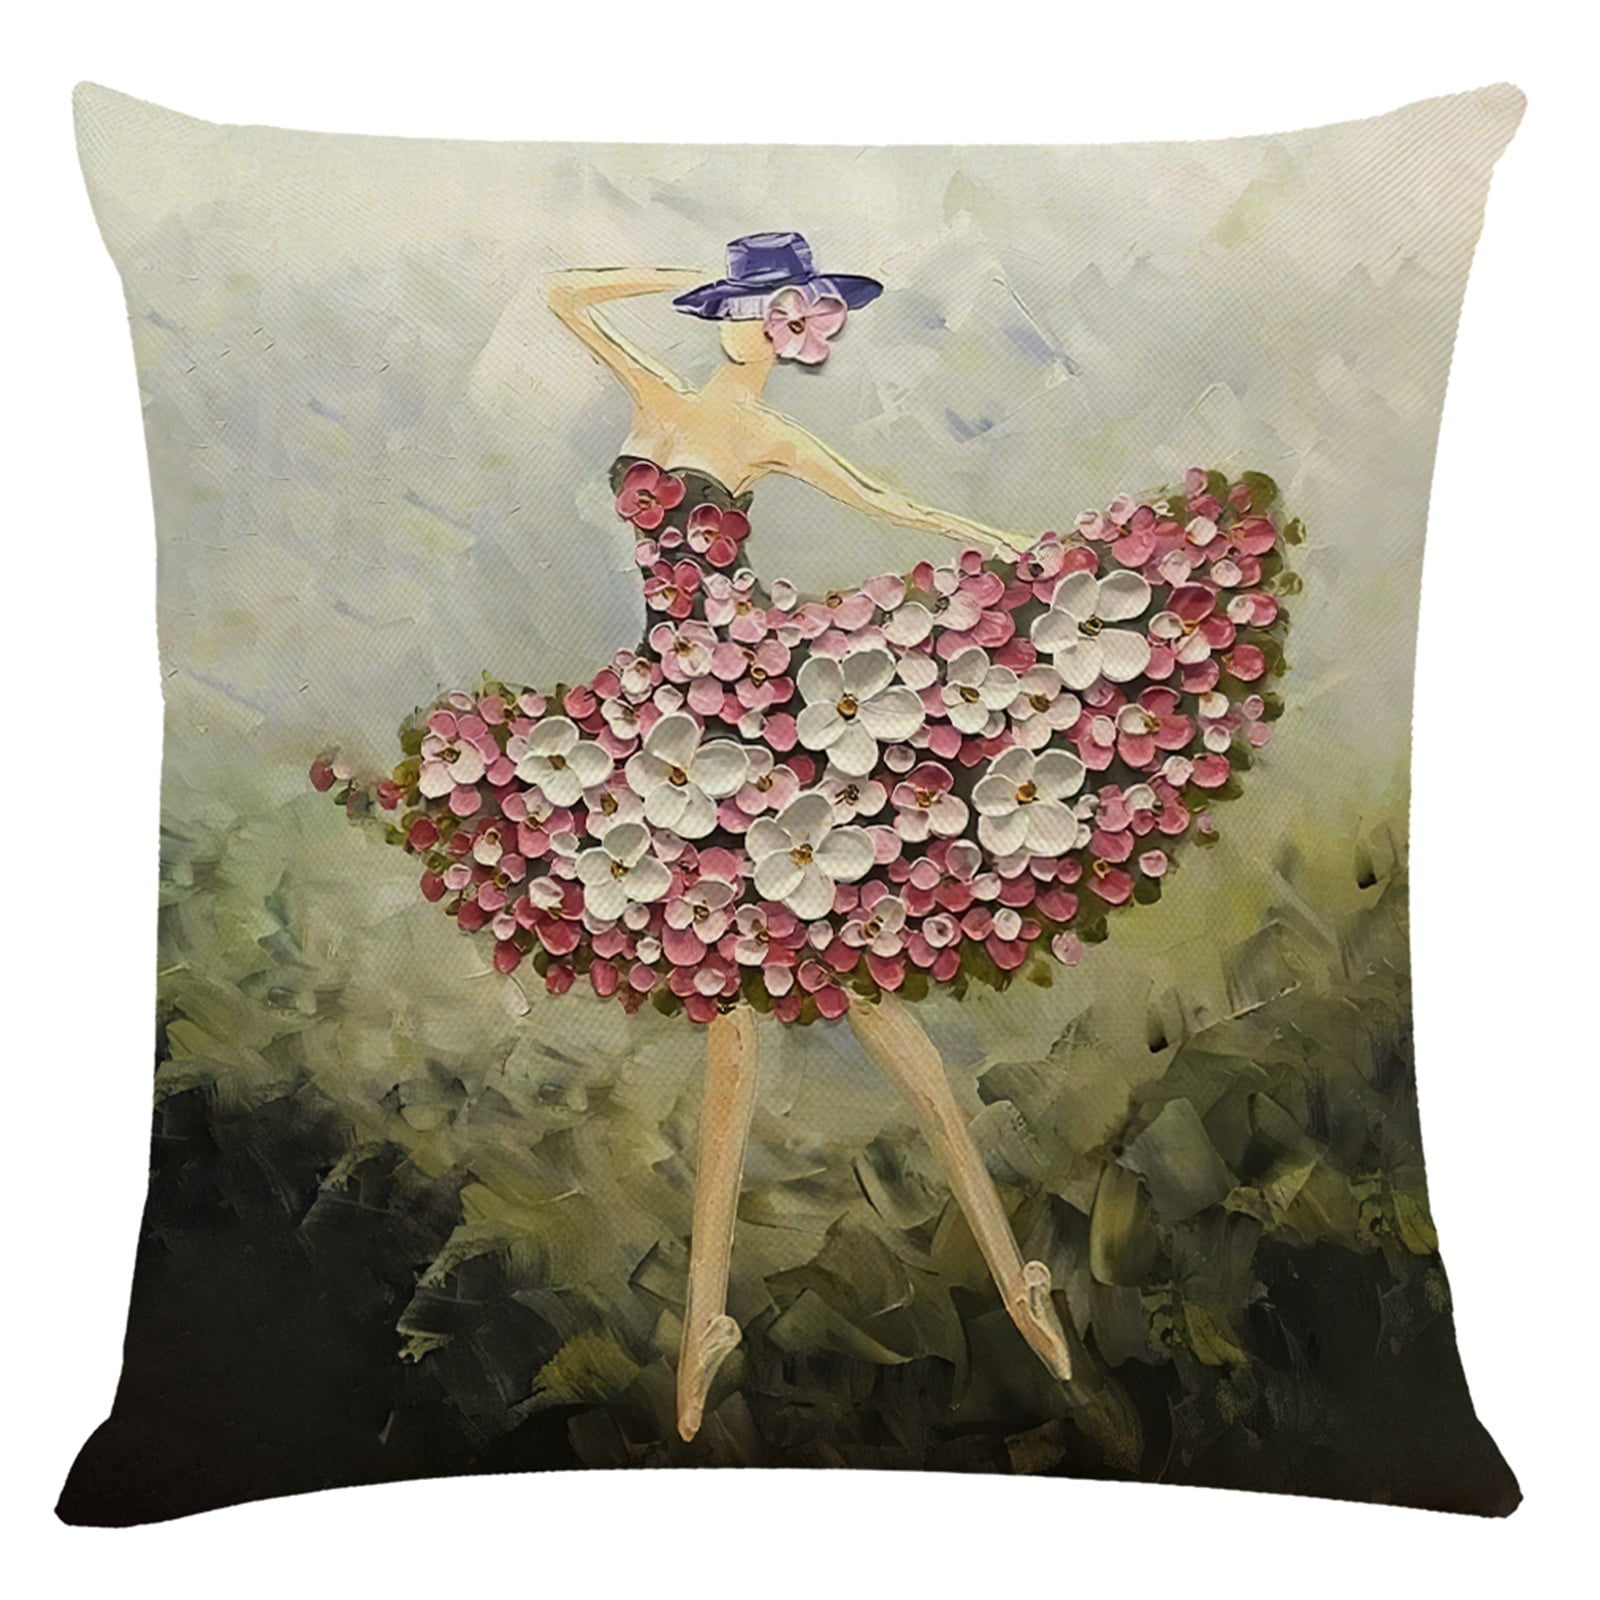 Details about   Gerber Daisy Pillow Sham Decorative Pillowcase 3 Sizes Bedroom Decor 